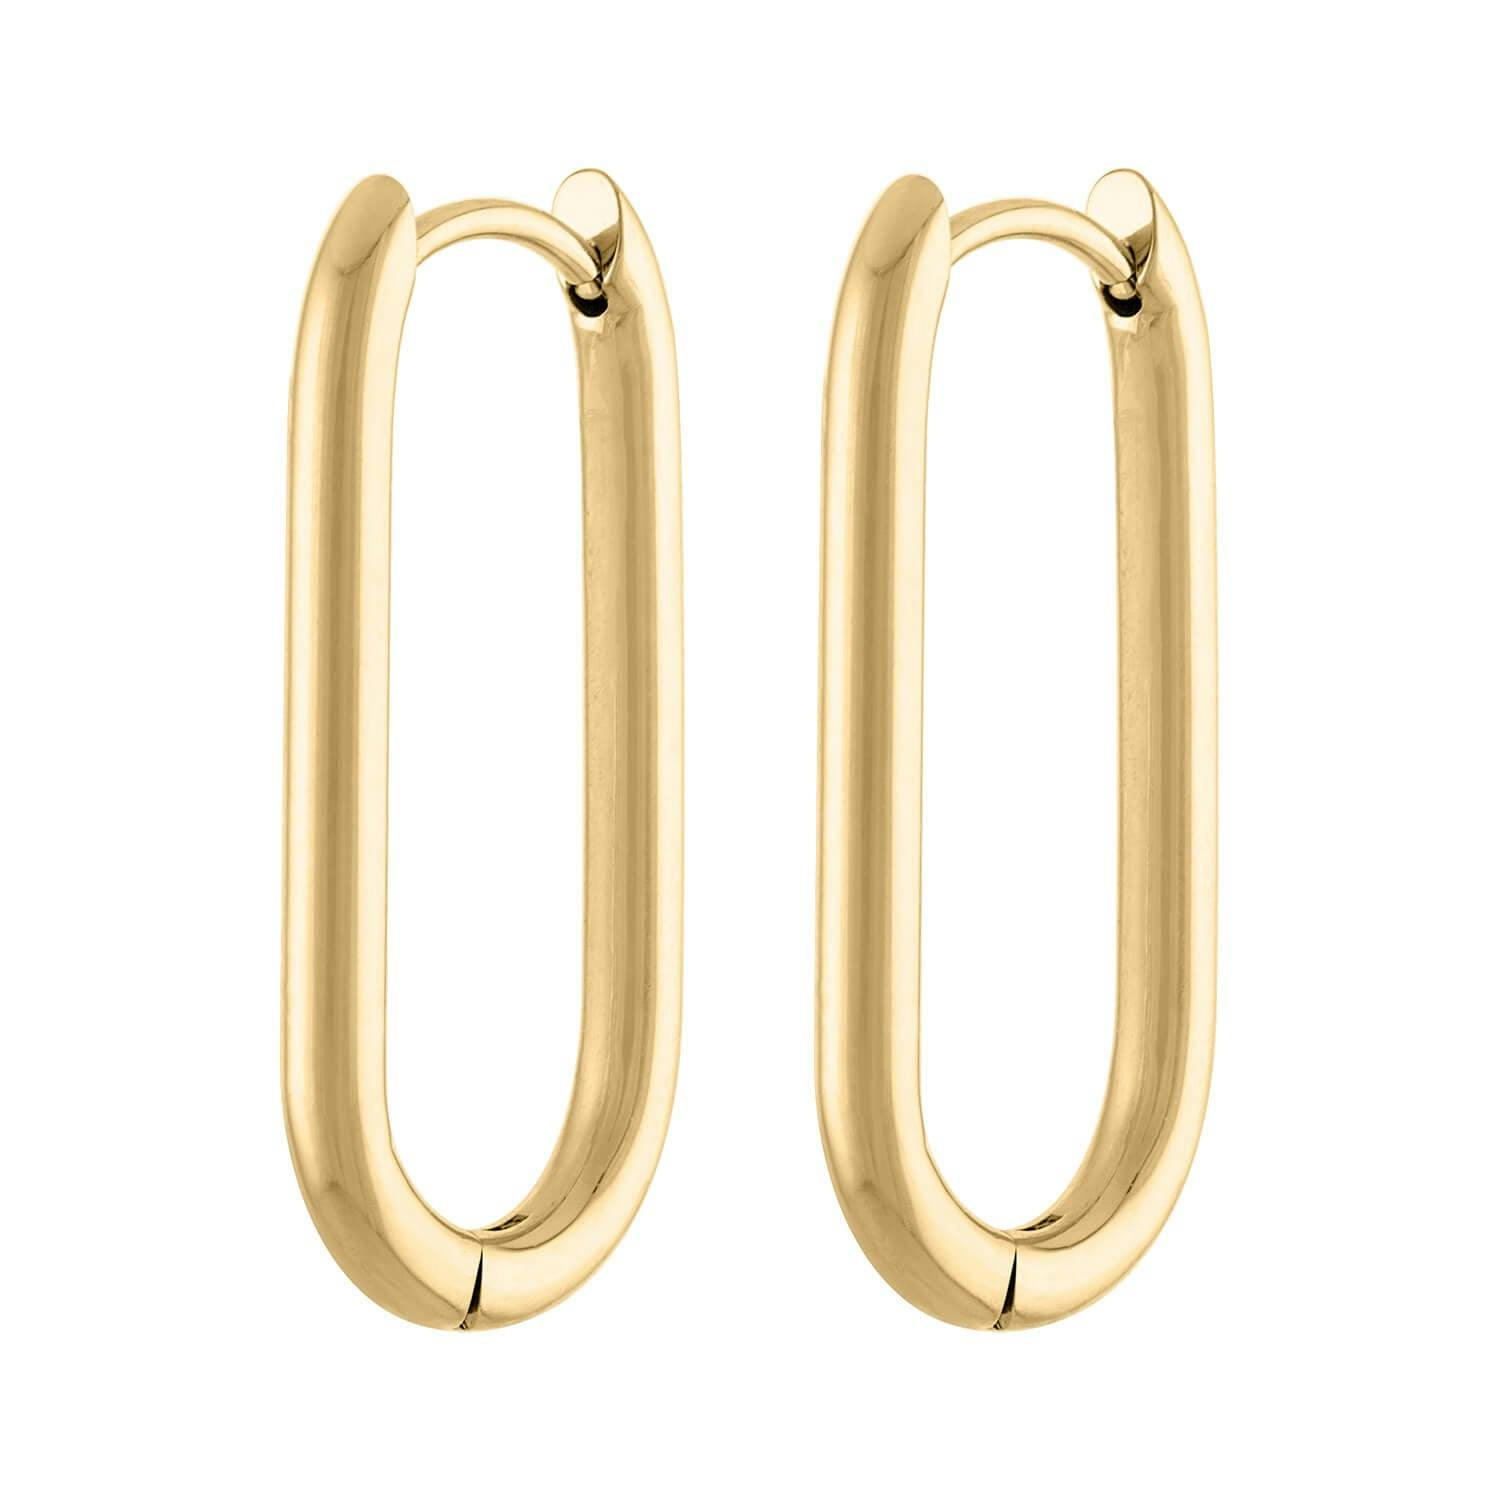 Halo Oval Hoop Earrings in Titanium (Gold)